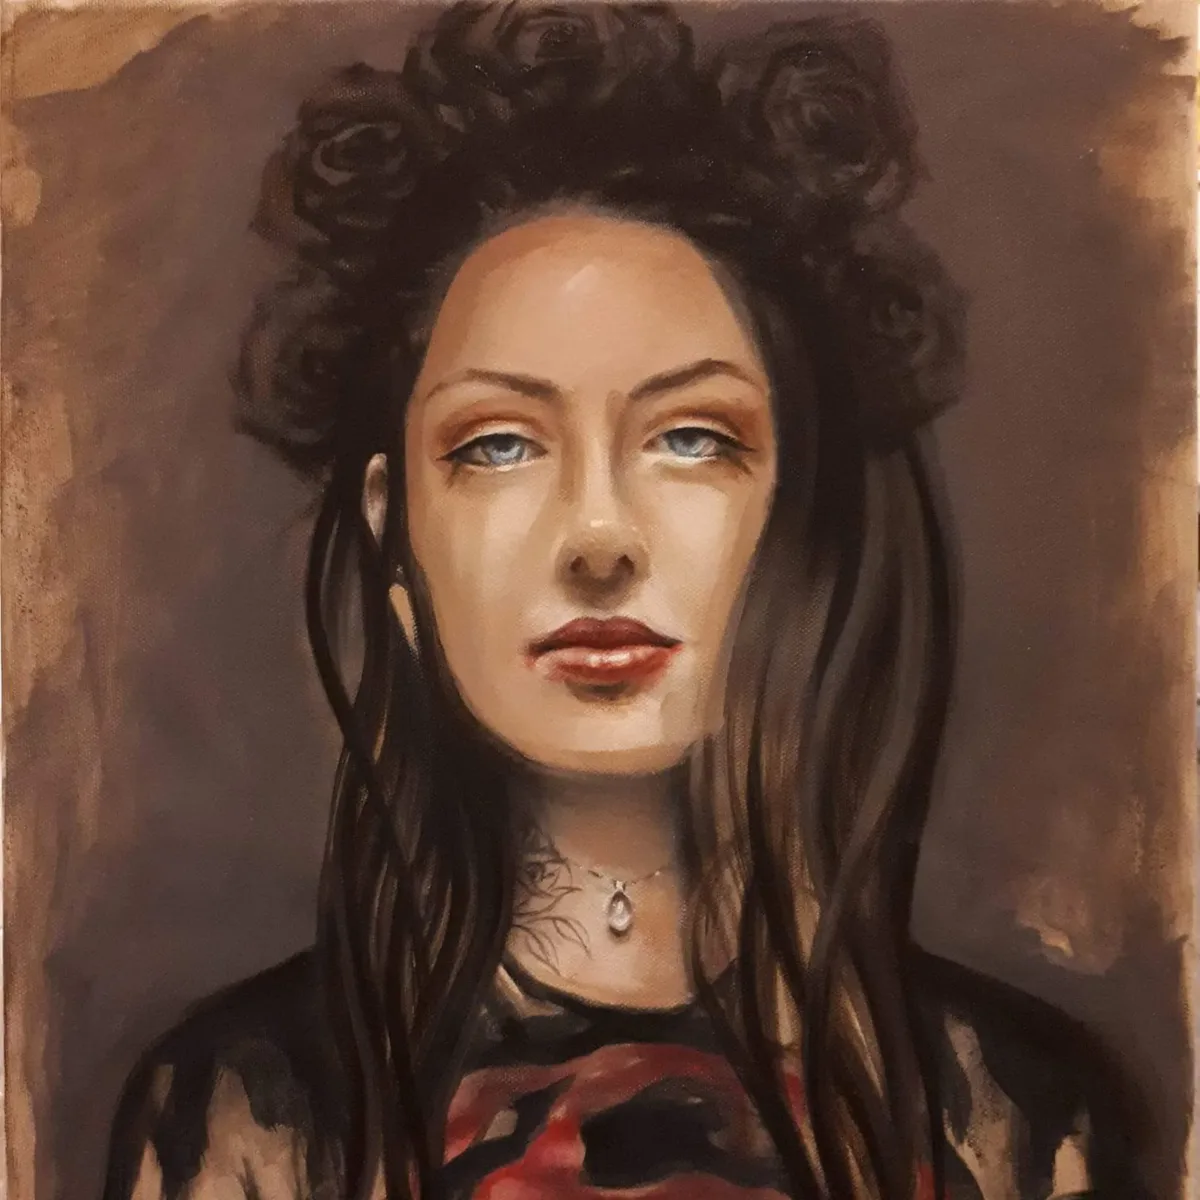 Painting of contemporary artist Vartan Ghazarian - Supergirl